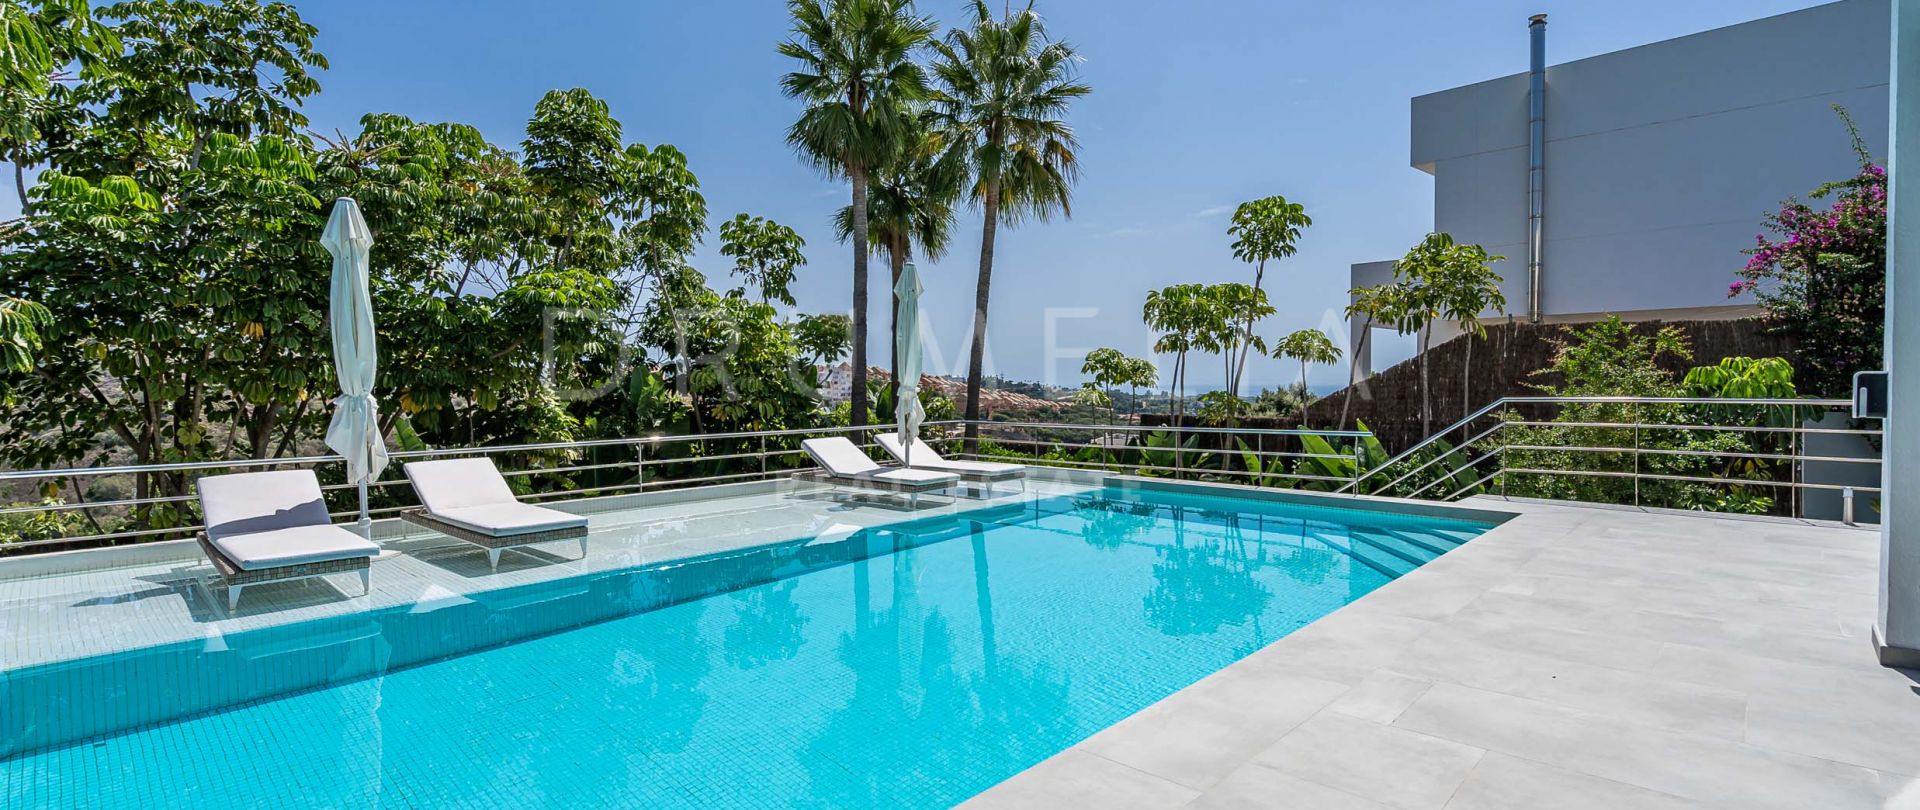 Impresionante villa moderna de lujo con características de alta tecnología, Elviria, Marbella Este